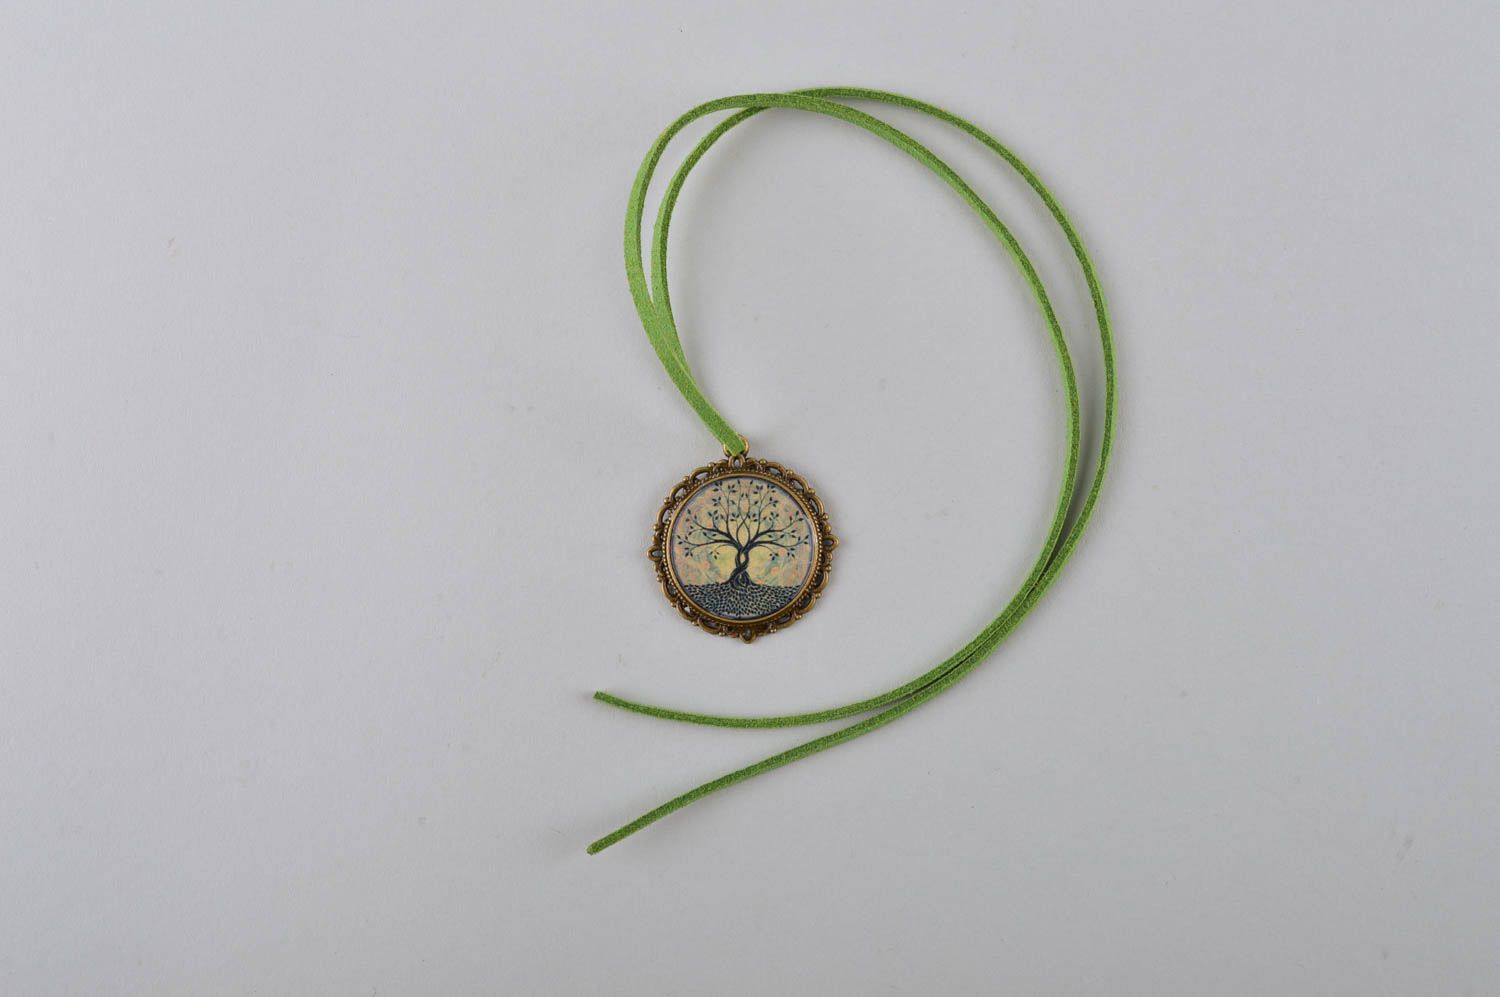 Unusual handmade necklace designs metal pendant beautiful jewellery gift ideas photo 2